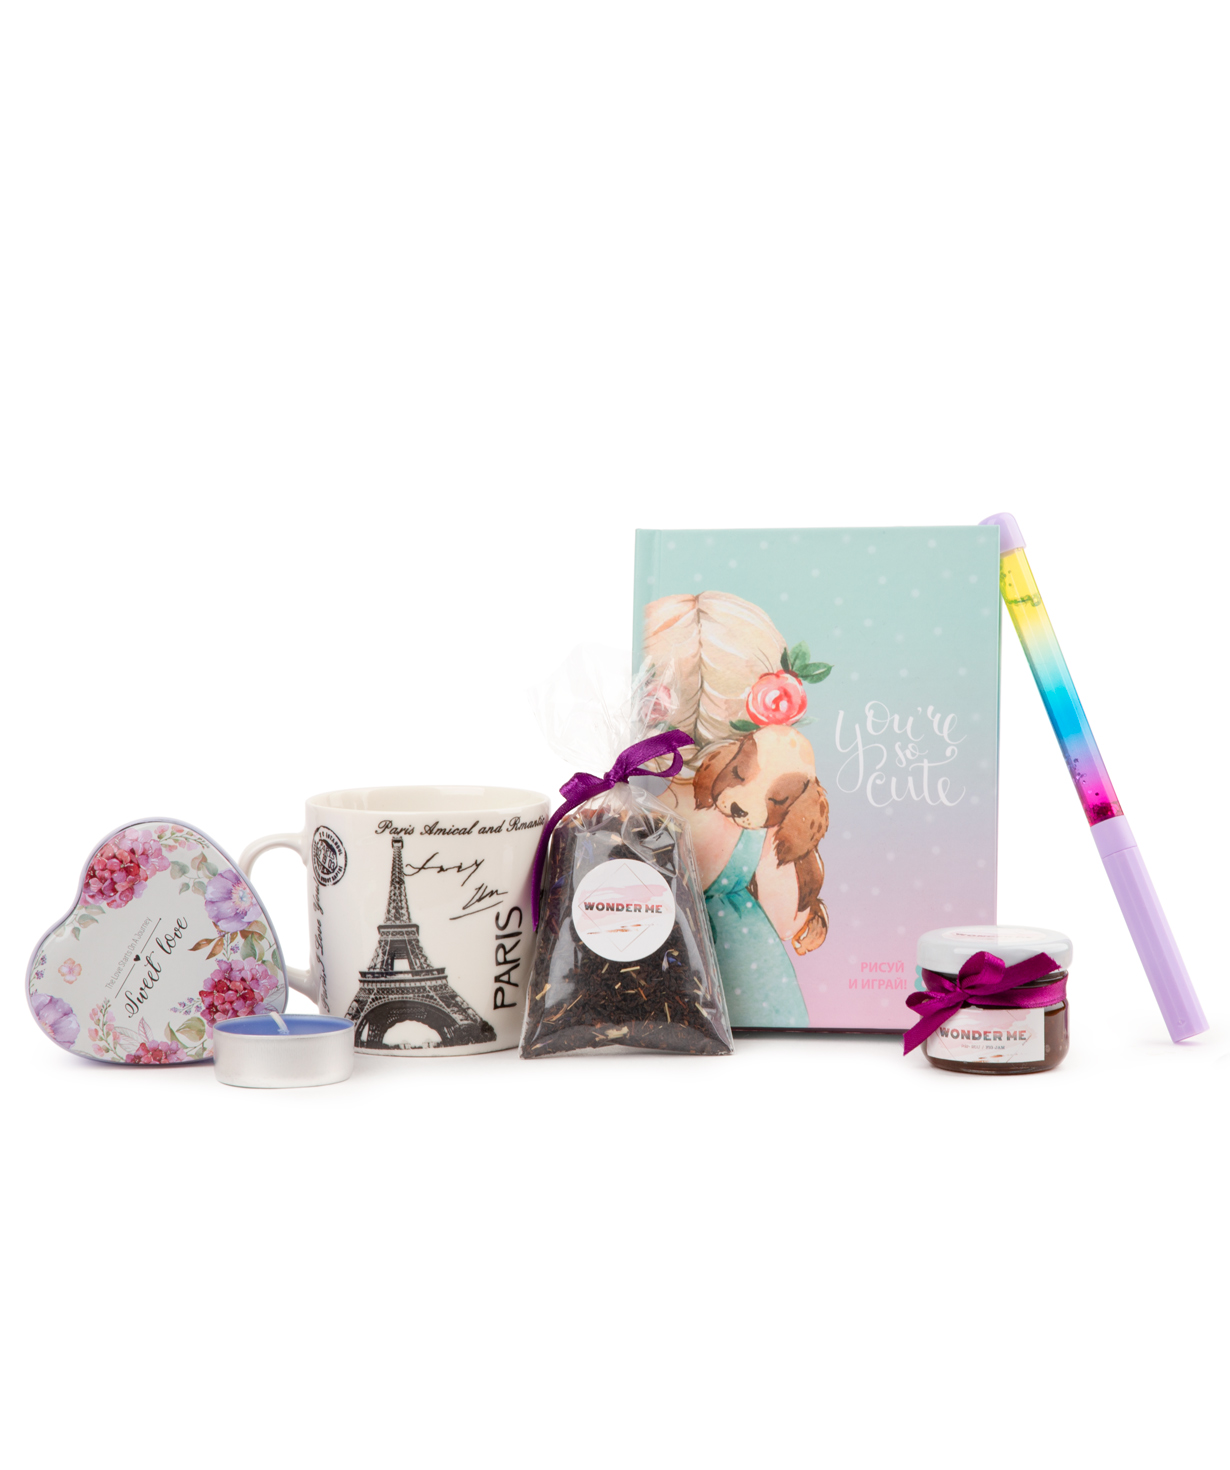 Gift box ''Wonder Me'' so cute